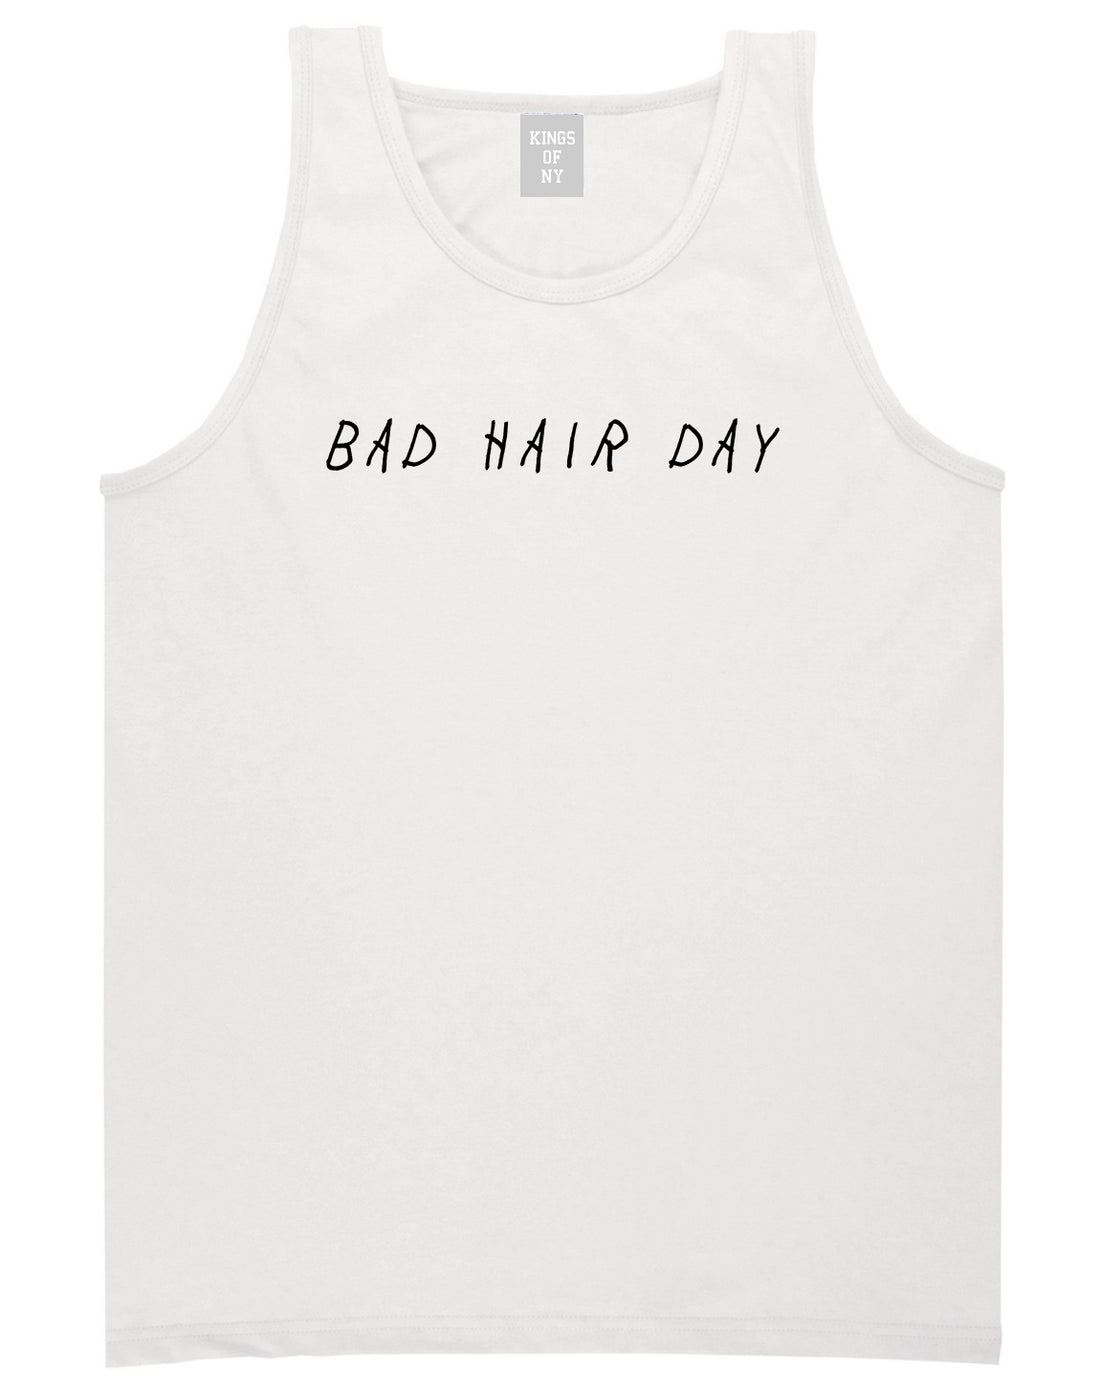 Bad Hair Day White Tank Top Shirt by Kings Of NY